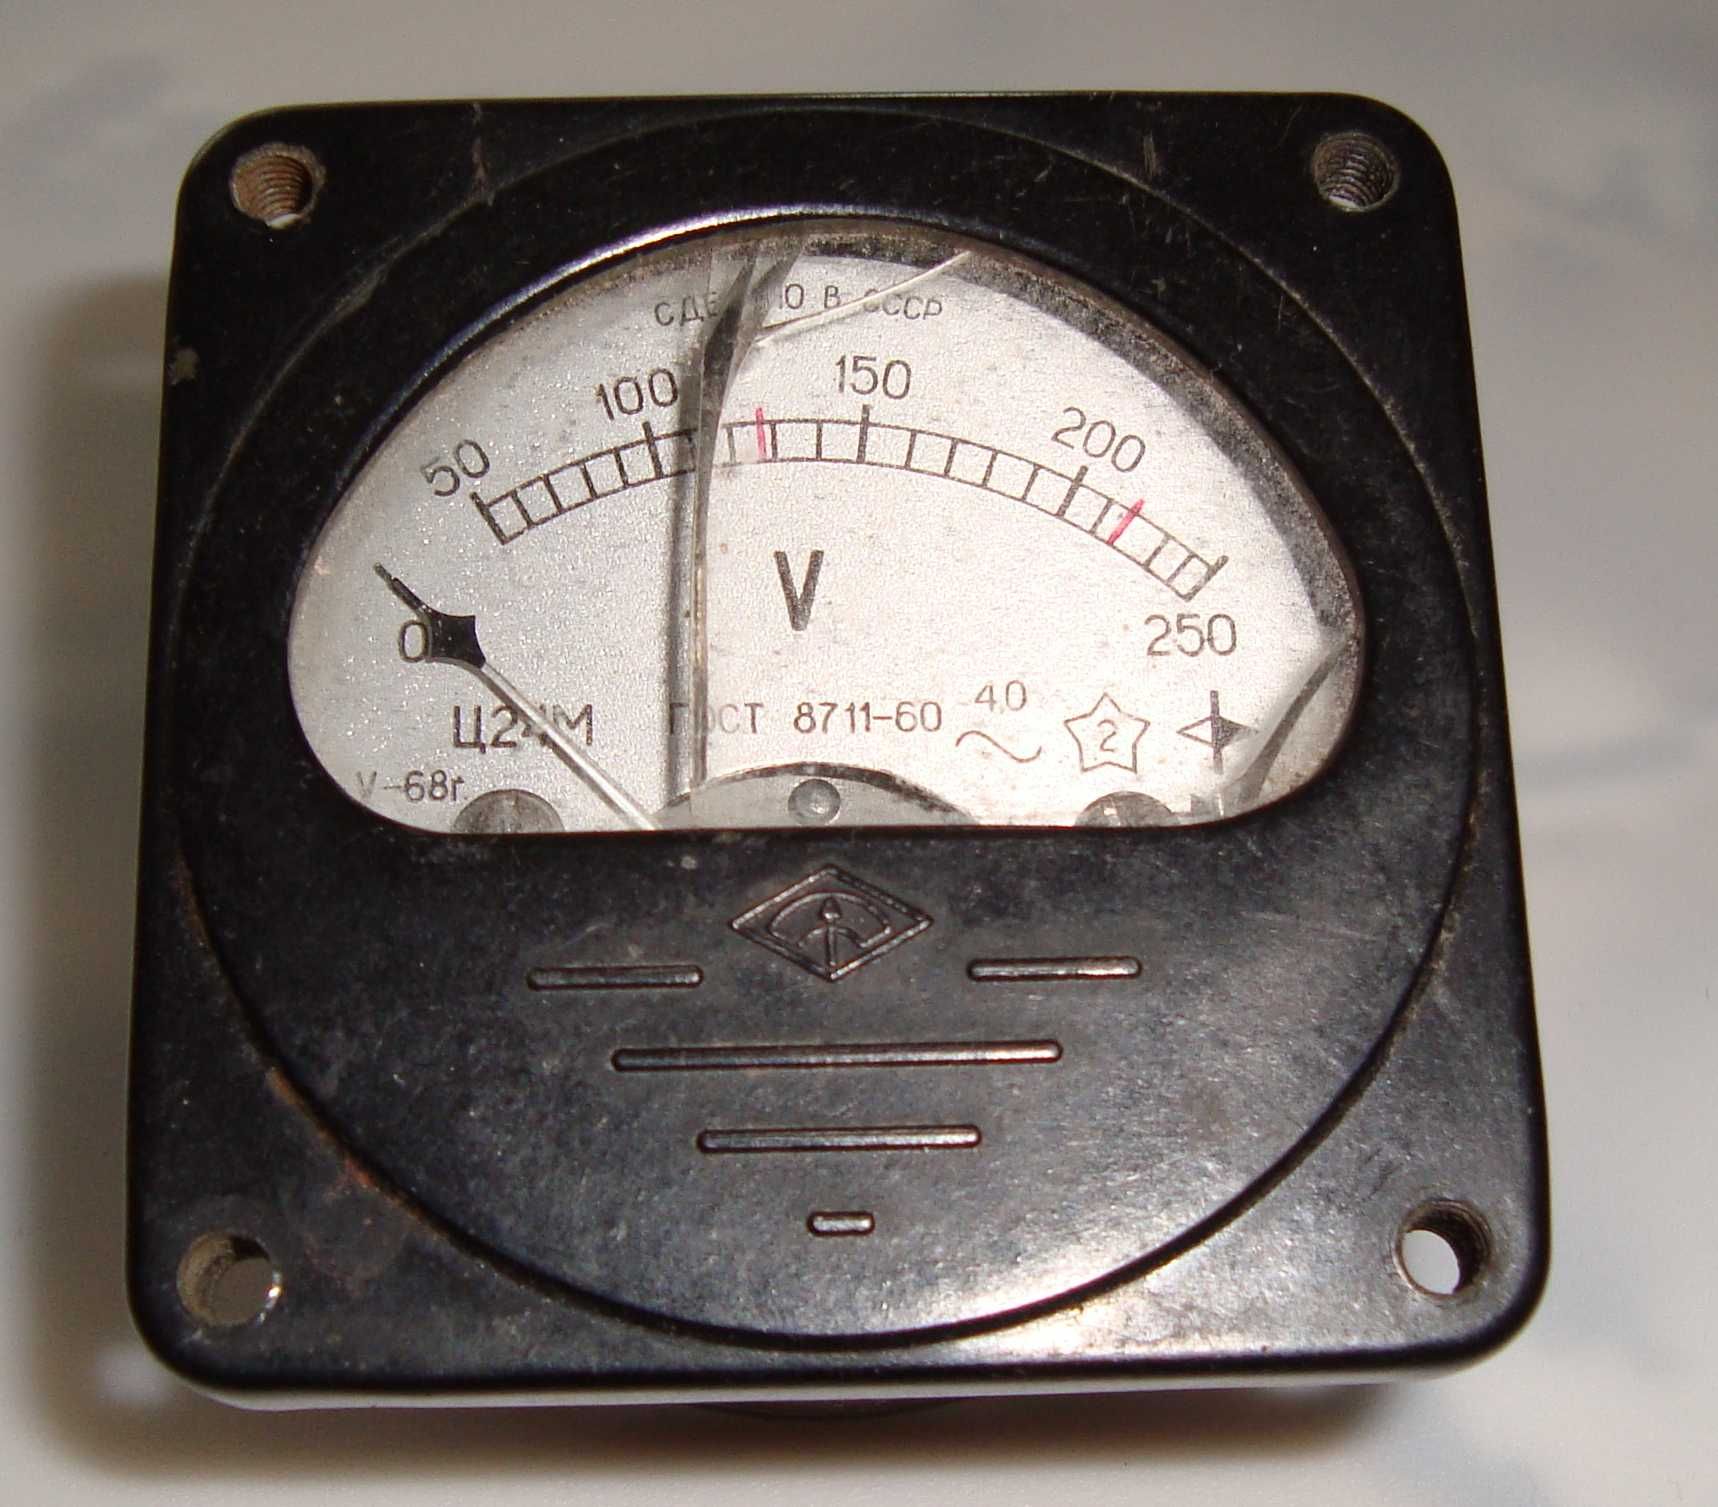 Вольтметр Ц24М ГОСТ 8711-60 250в 1968г. головка измерит Обмин на инше